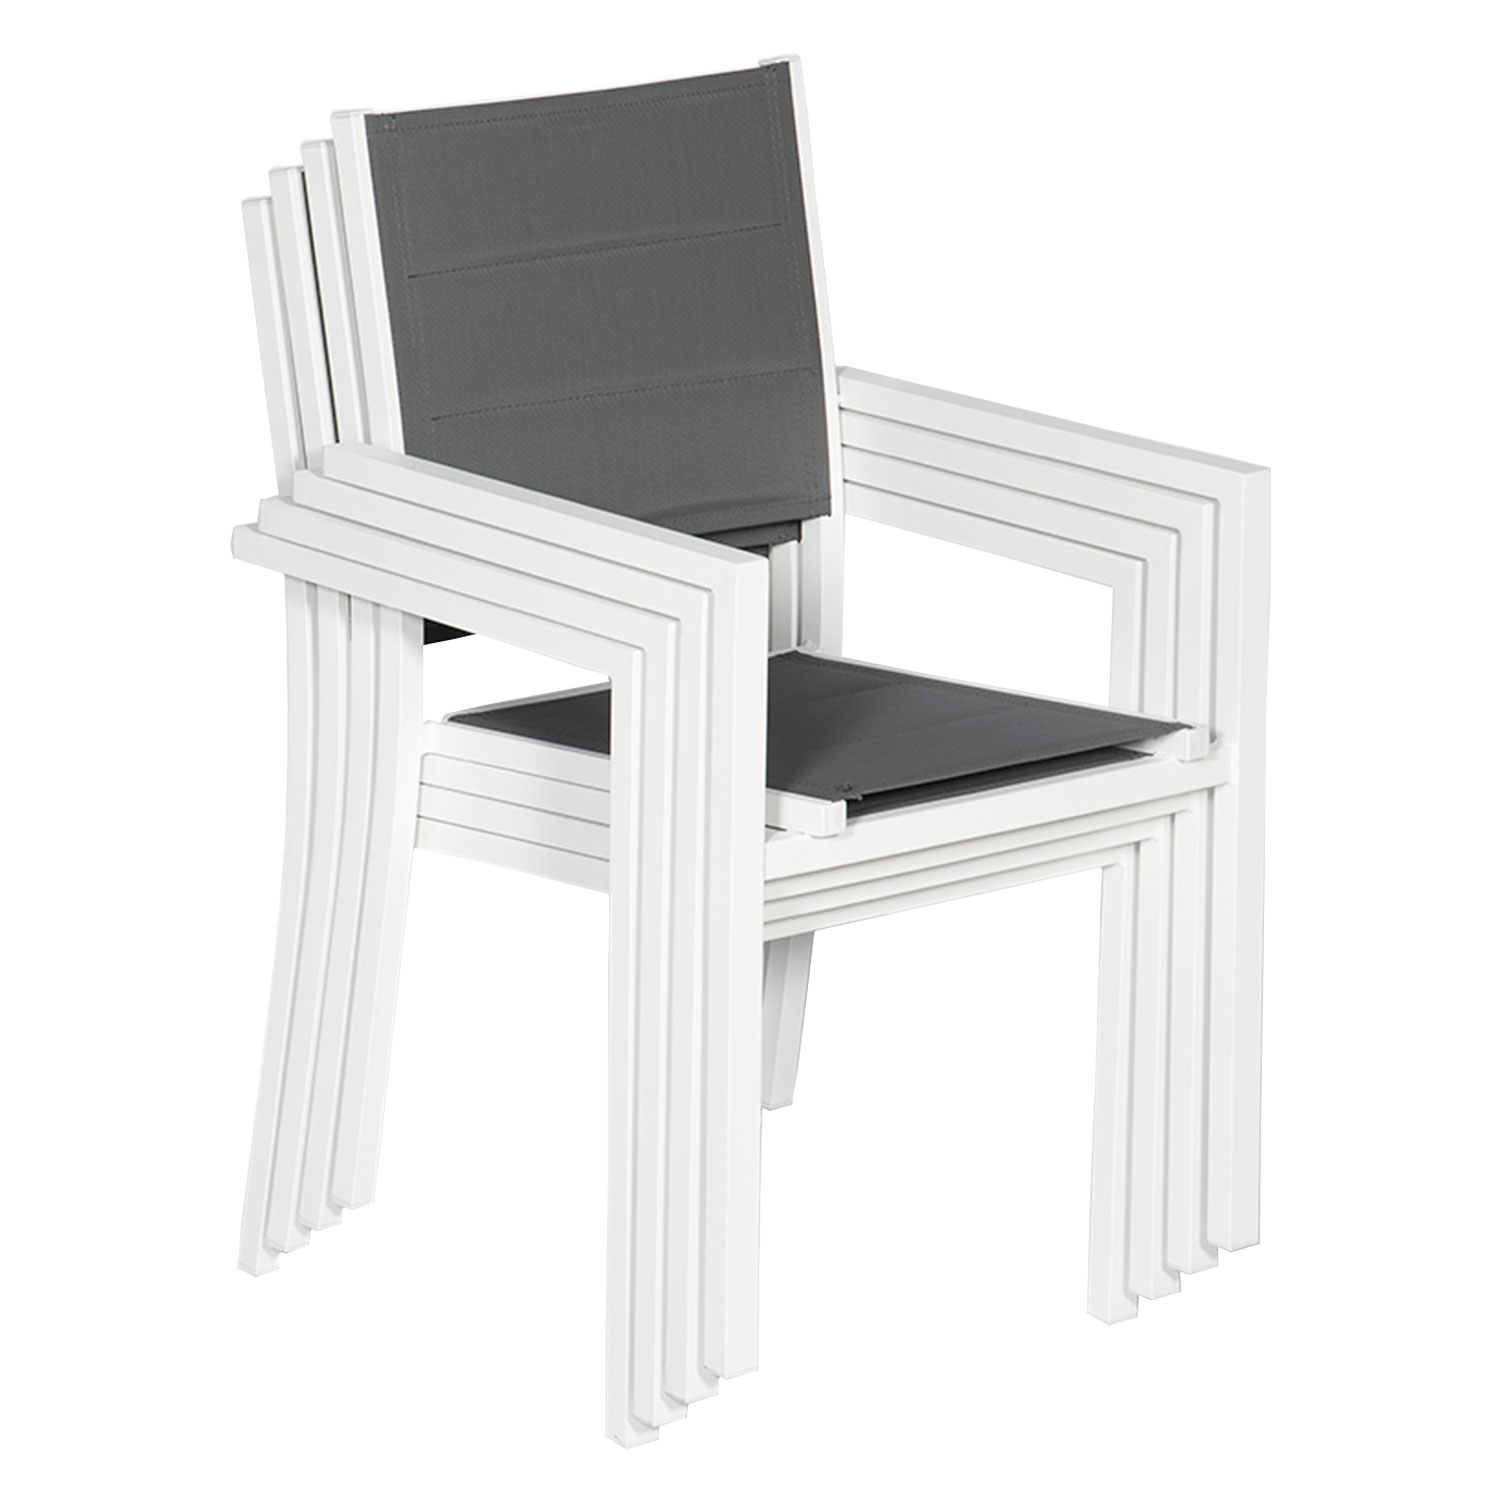 Conjunto de 6 cadeiras estofadas em alumínio branco - textileno cinzento